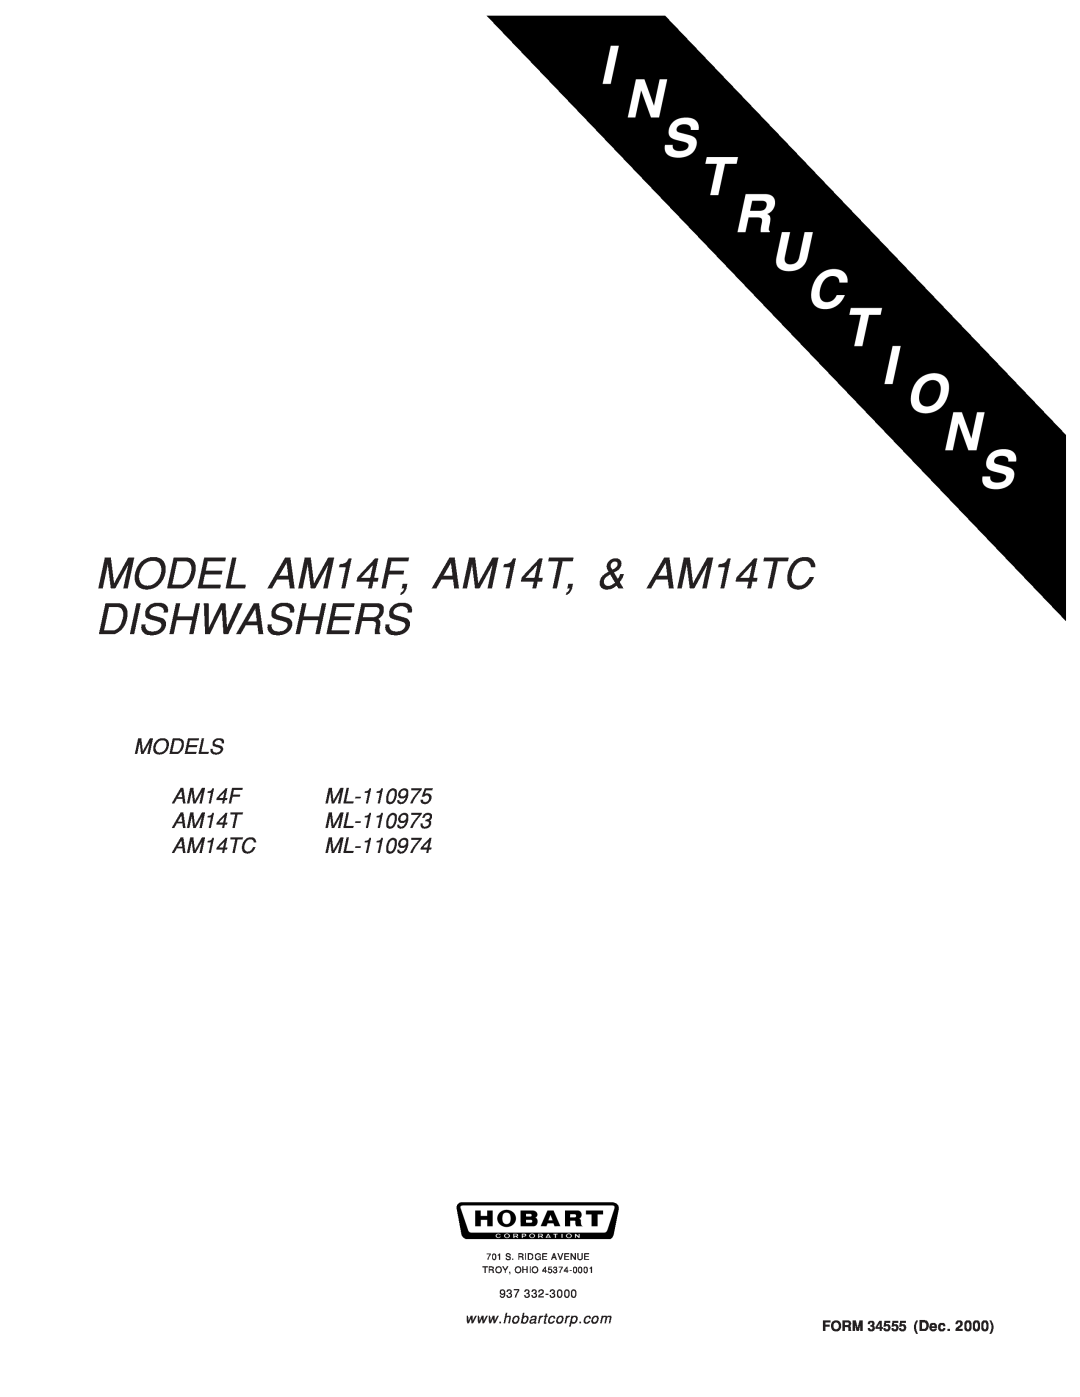 Hobart manual MODEL AM14F, AM14T, & AM14TC DISHWASHERS, MODELS AM14F ML-110975 AM14T ML-110973 AM14TC ML-110974 